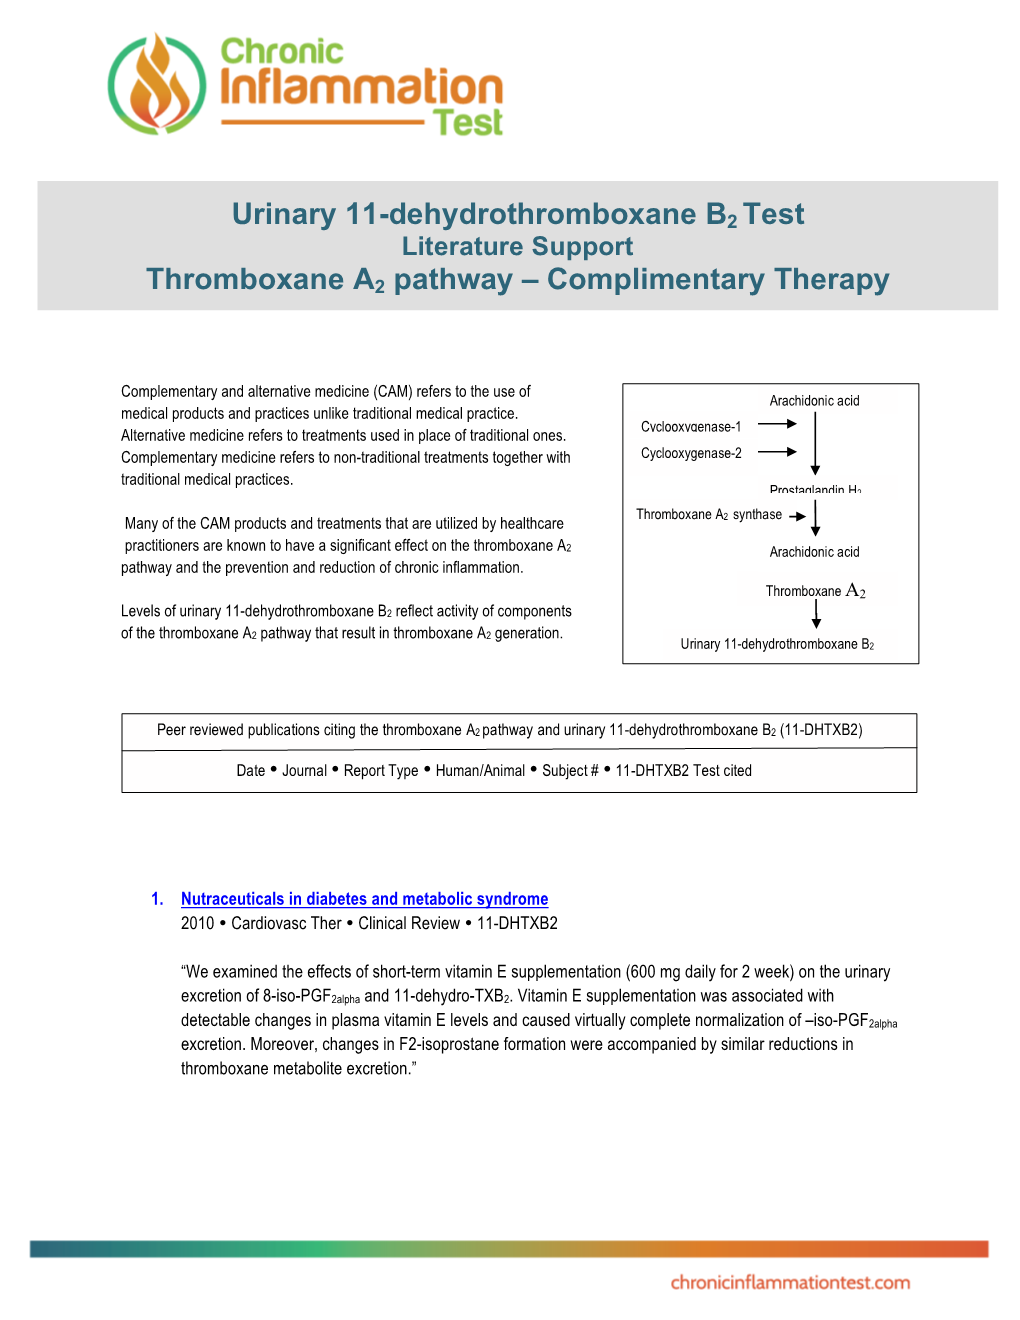 Urinary 11-Dehydrothromboxane B2 Test Literature Support